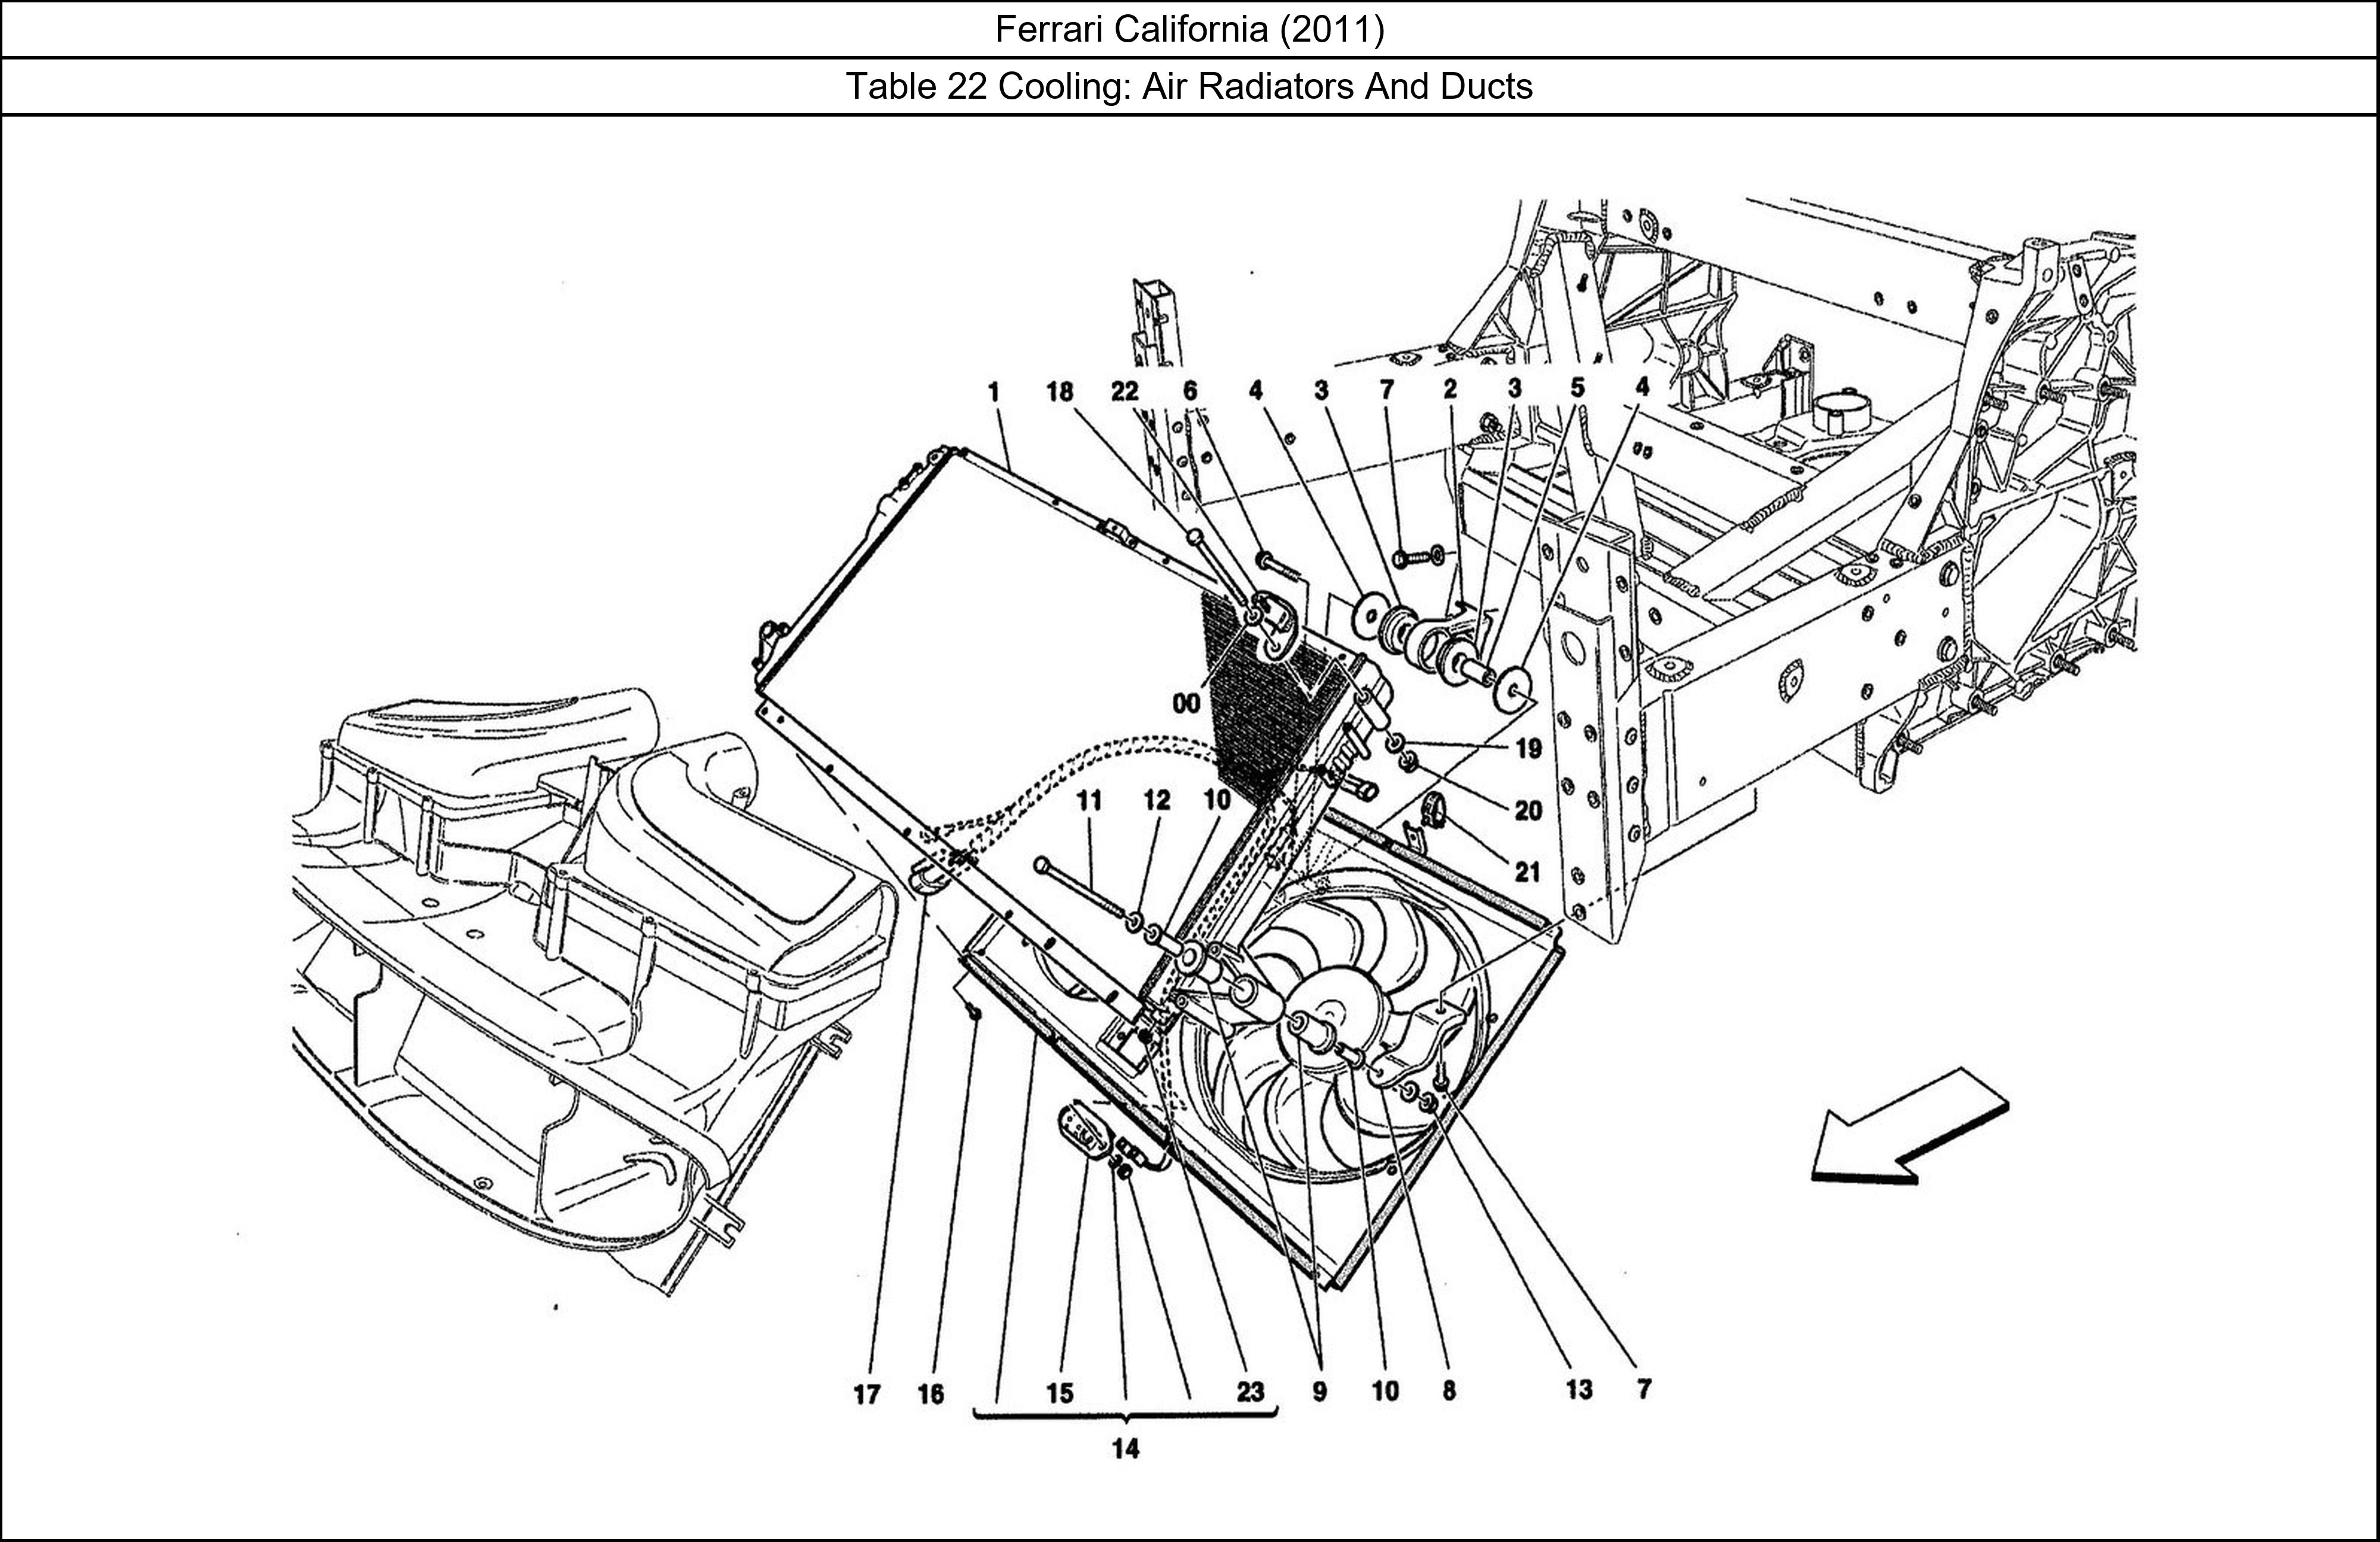 Ferrari Parts Ferrari California (2011) Table 22 Cooling: Air Radiators And Ducts